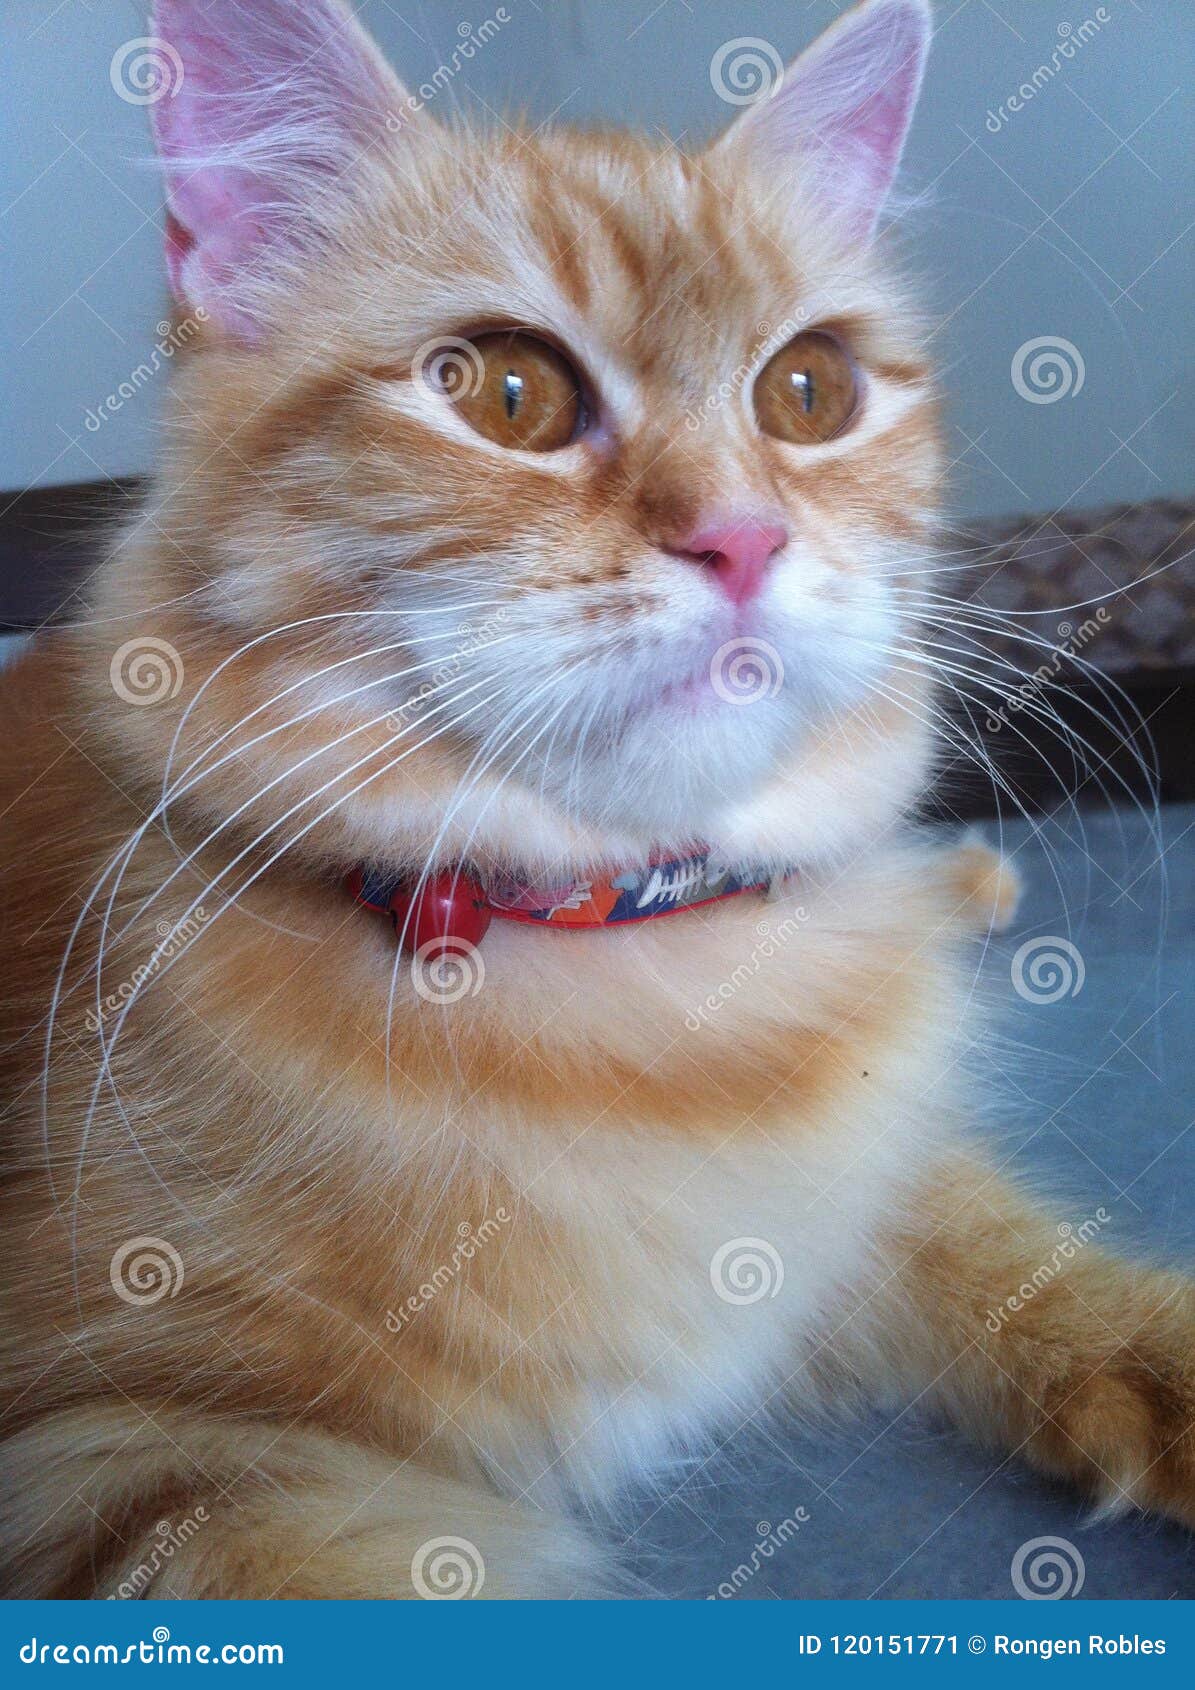 Beautiful Female Cat Posing in the Camera Stock Image - Image of ...